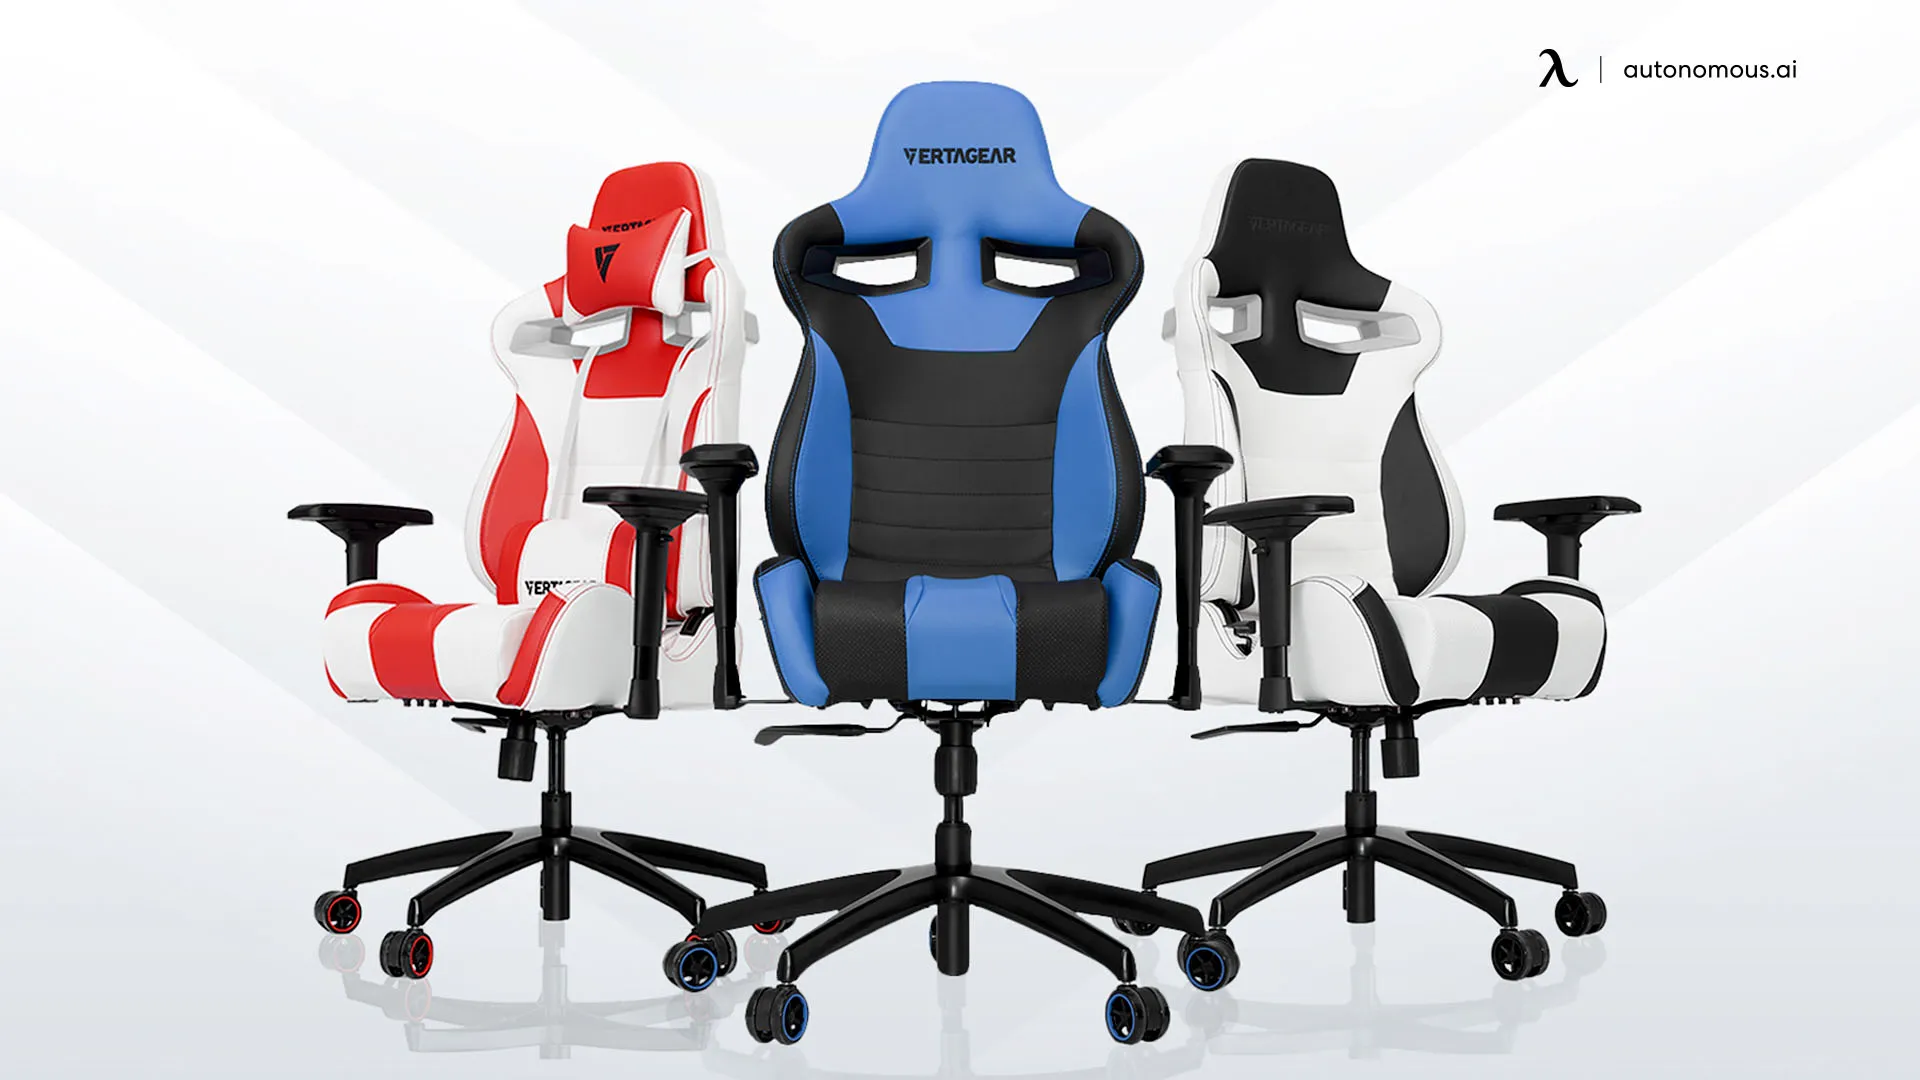 Vertagear SL4000 ergonomic high back gaming chair